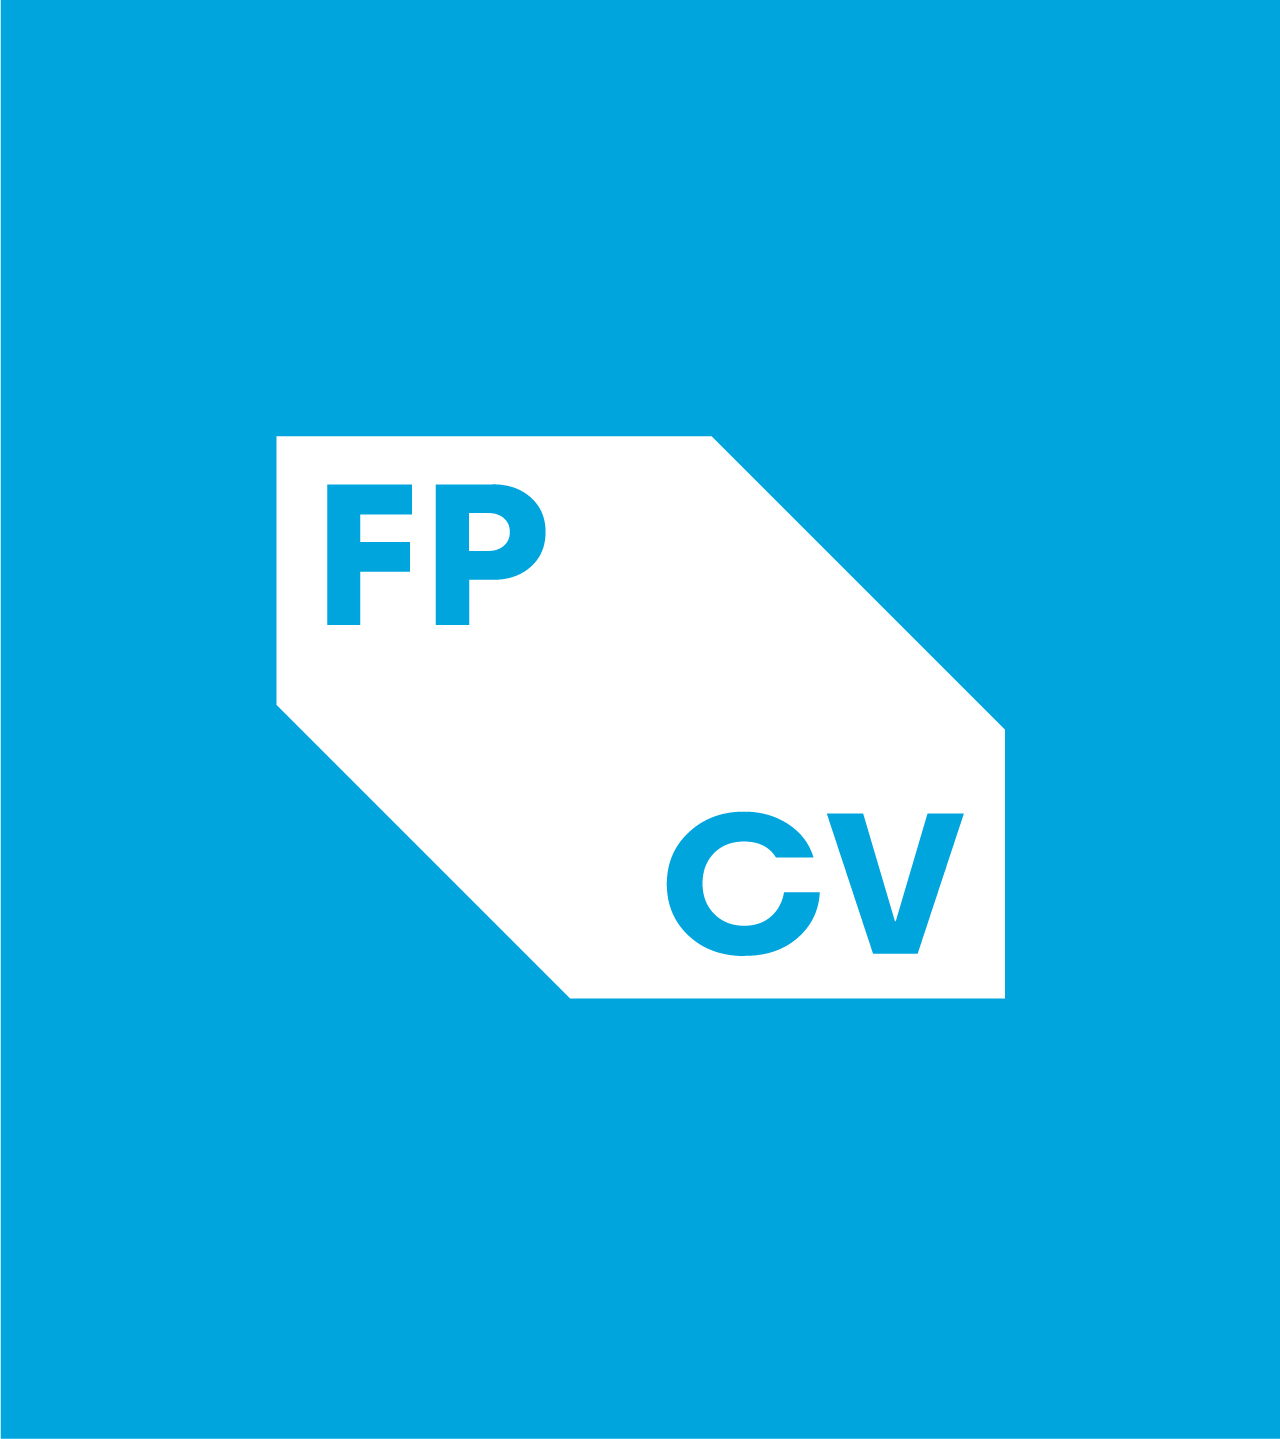 FPCV